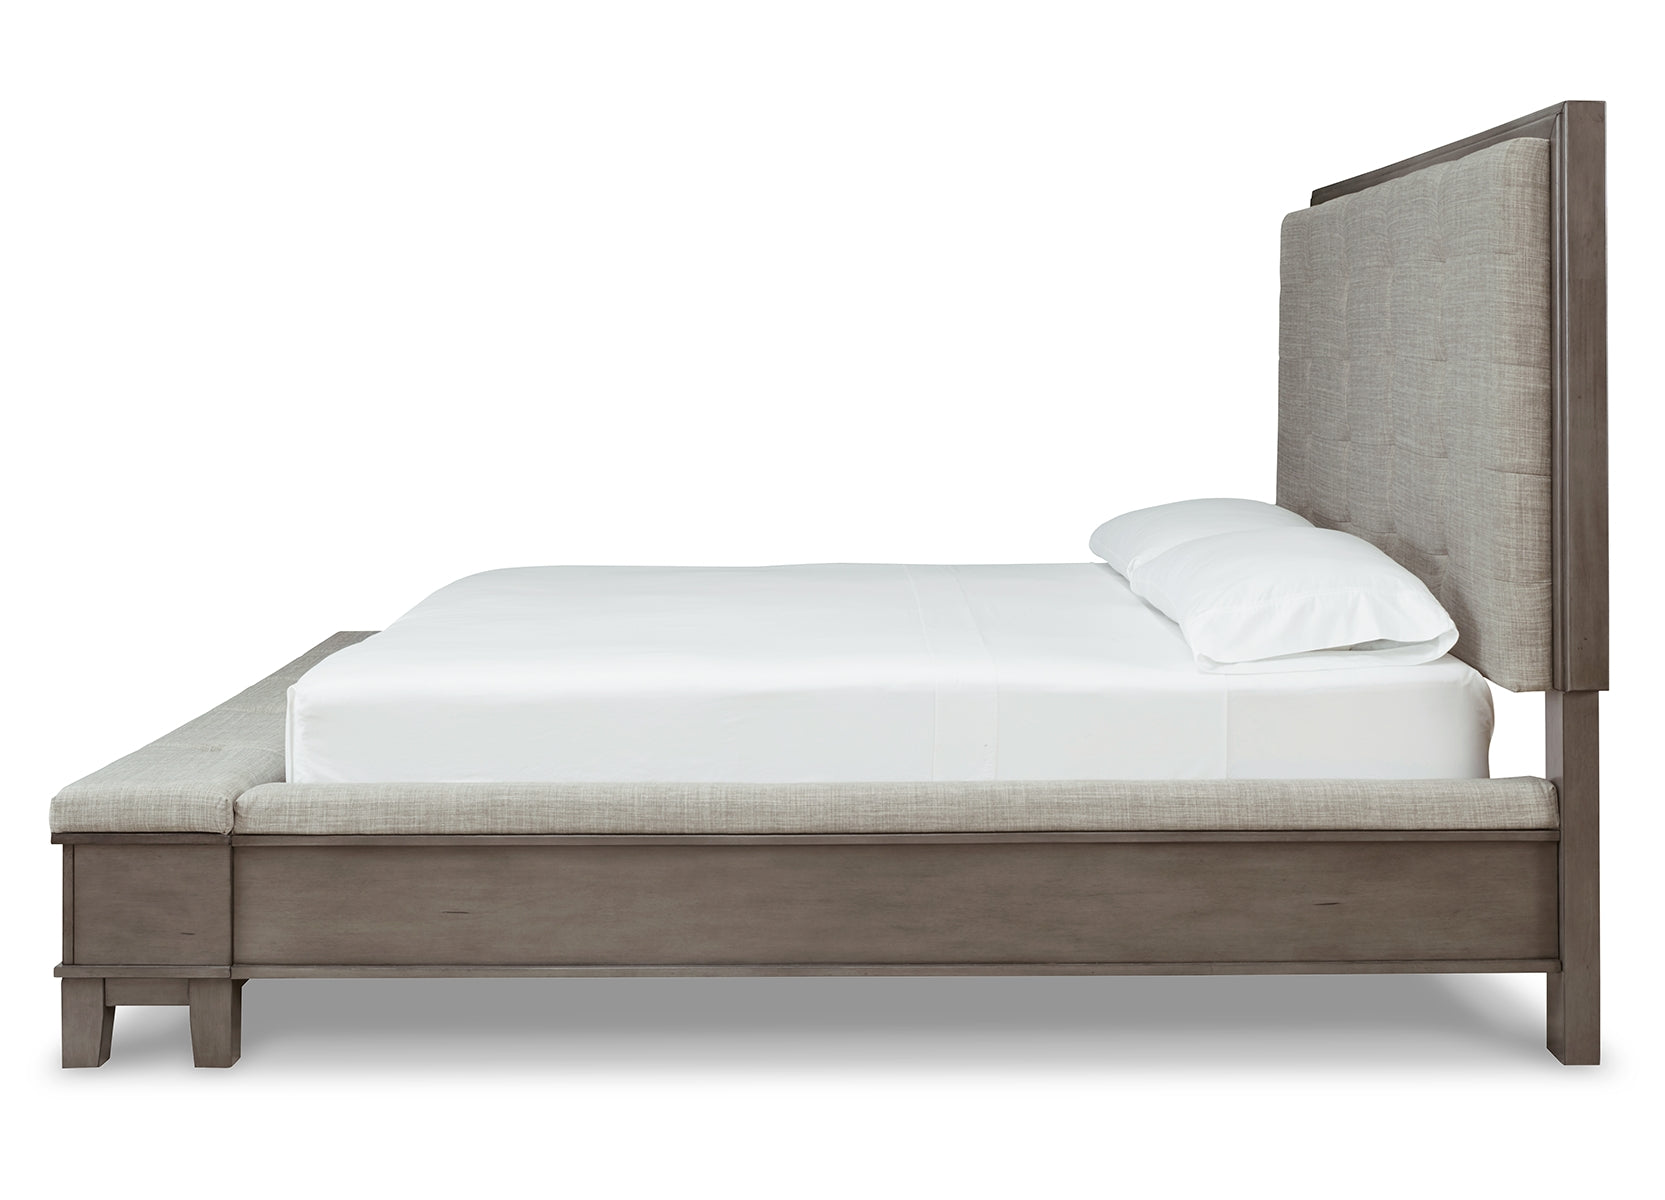 Hallanden Panel Bed with Storage Footboard Bedroom Set